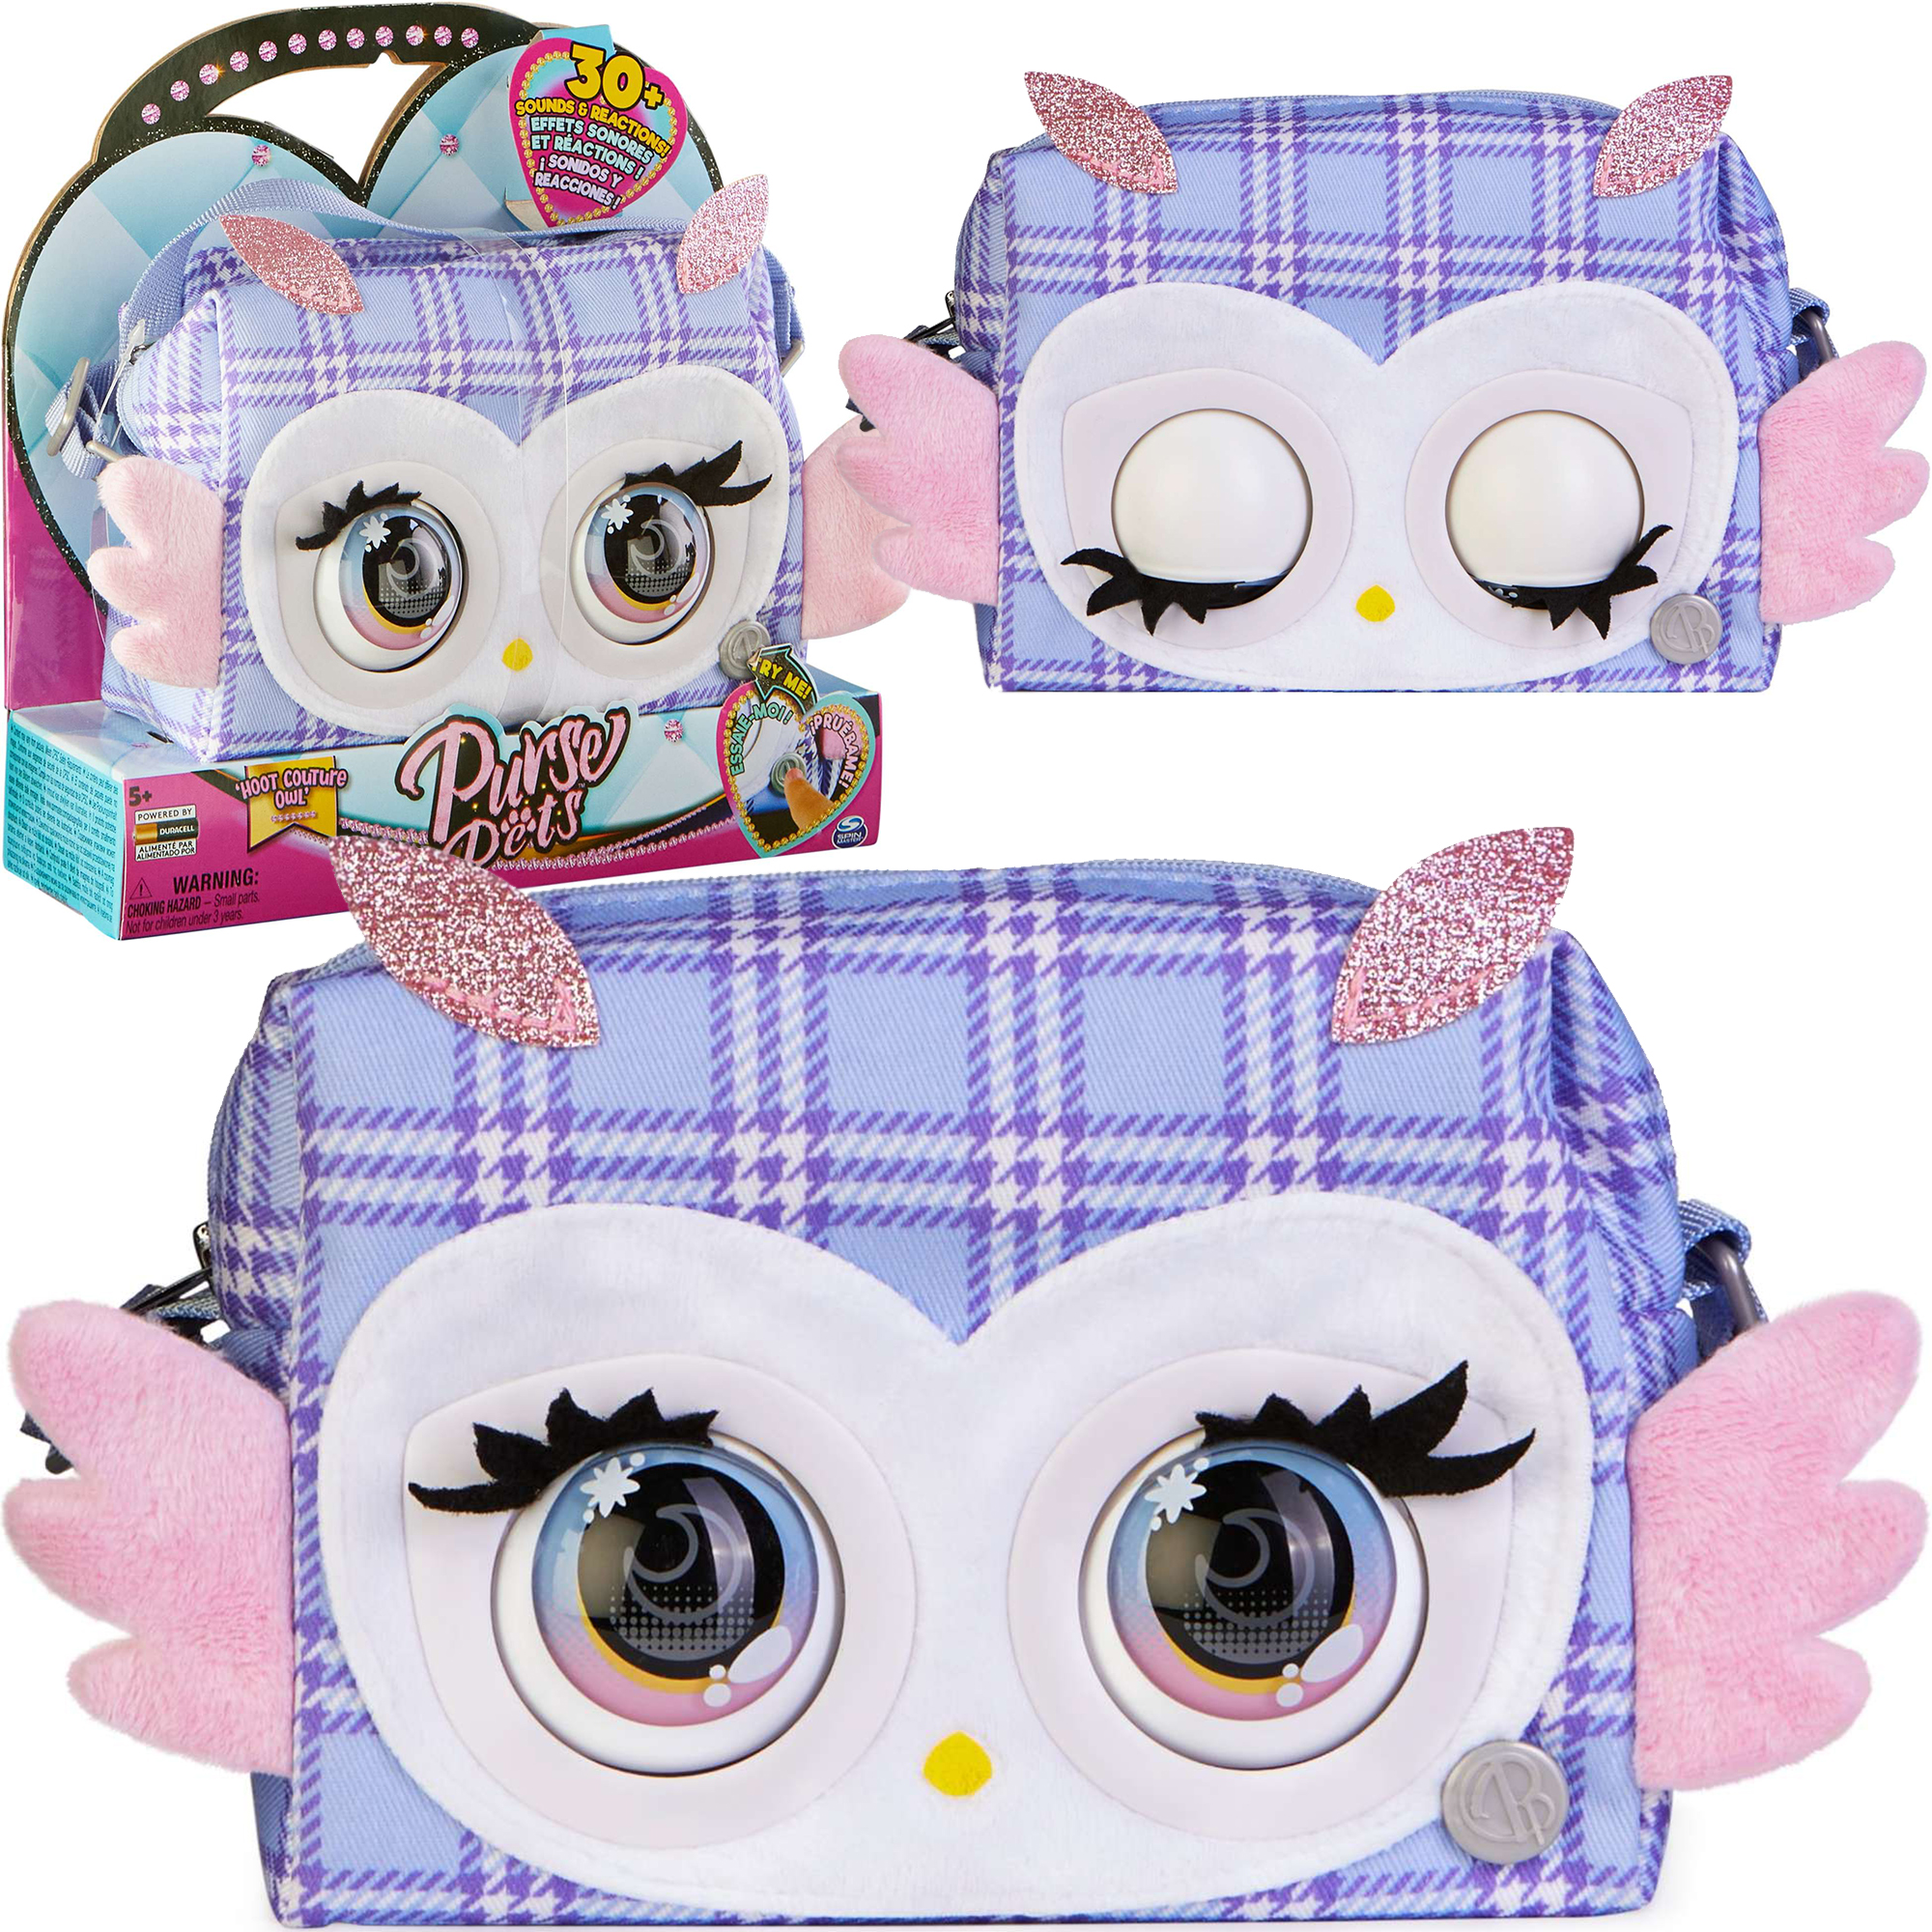 Purse Pets Hoot Couture Owl Sowa Interaktywna torebka z oczami Dwik